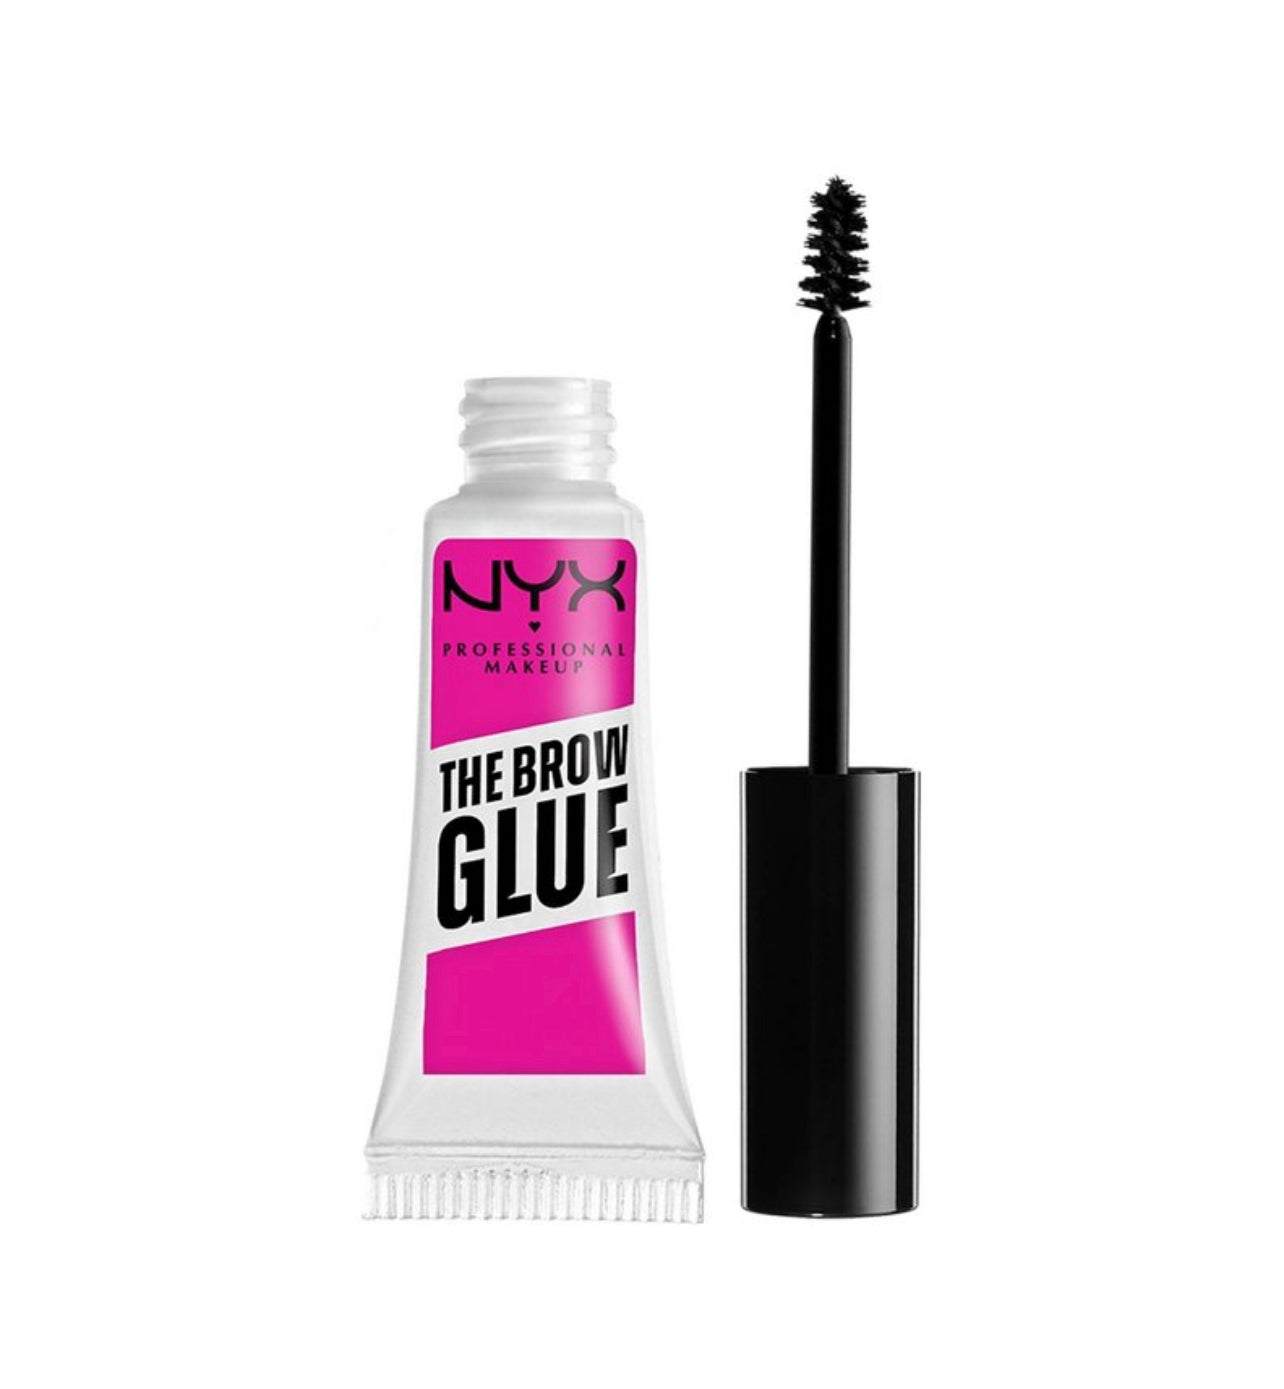 The Brow Glue Professional Makeup NYX